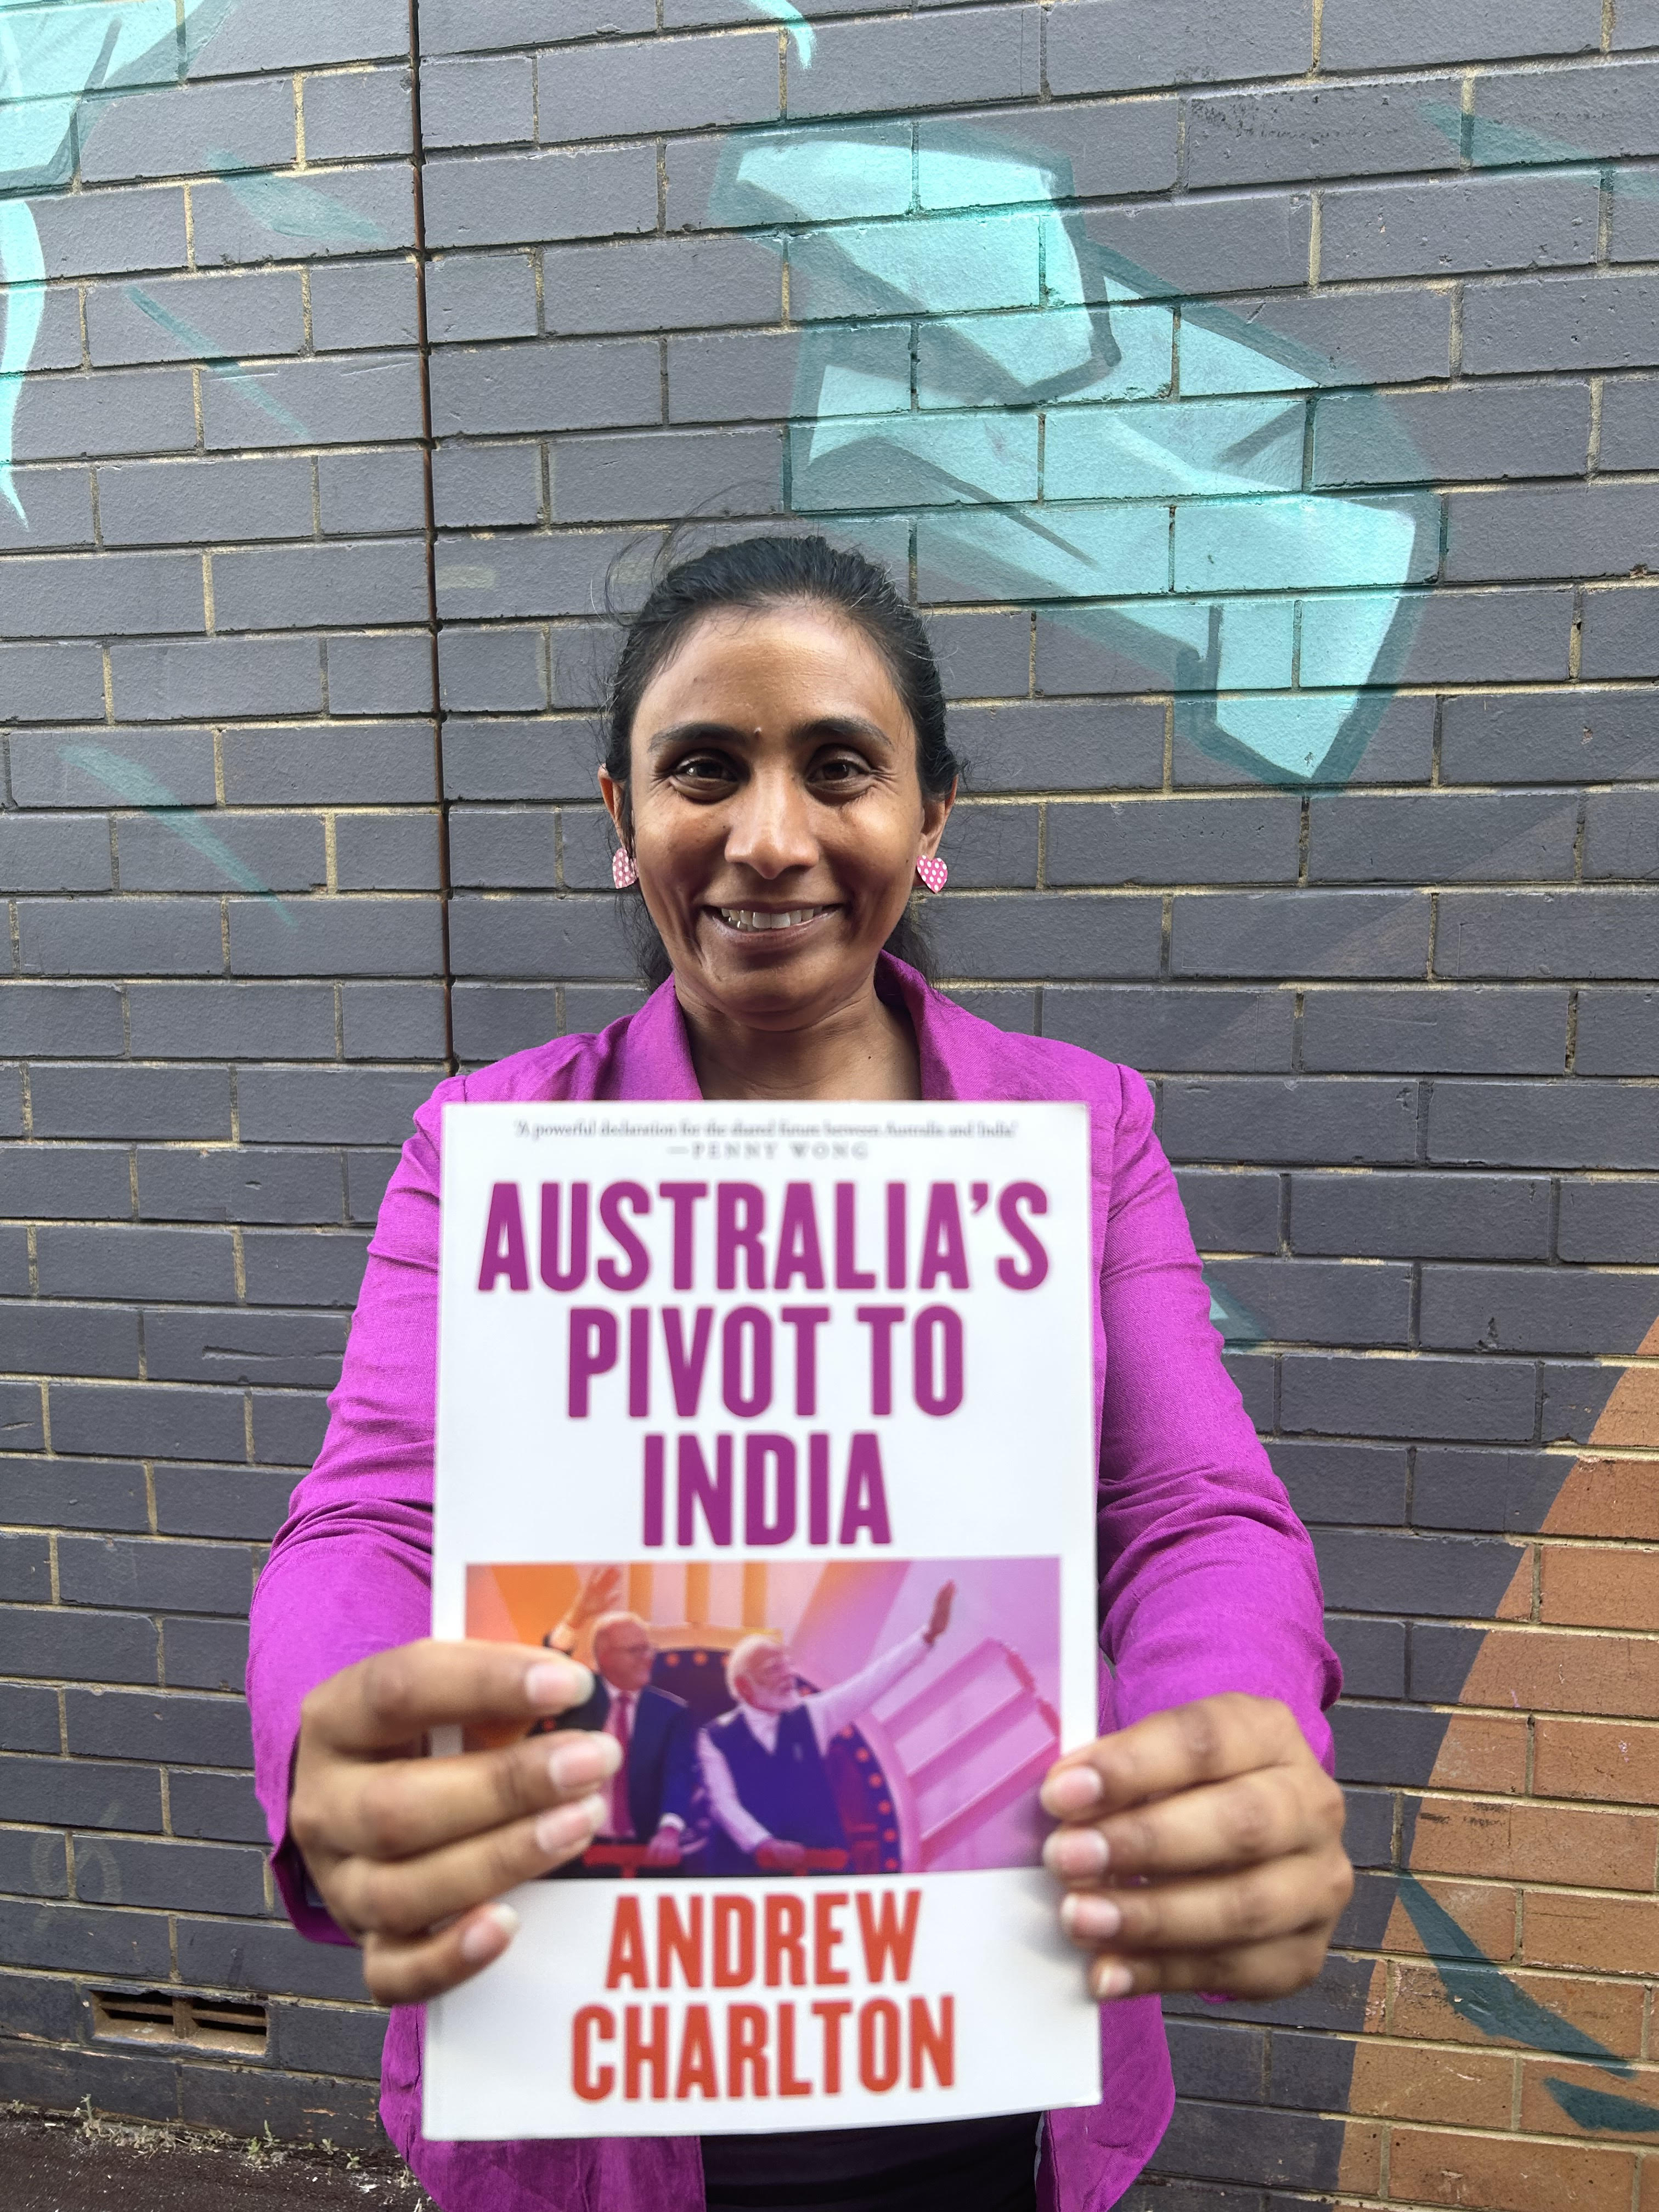 Zaneta Mascarenhas MP holds the book "Australia's Pivot to India" by Andrew Charlton